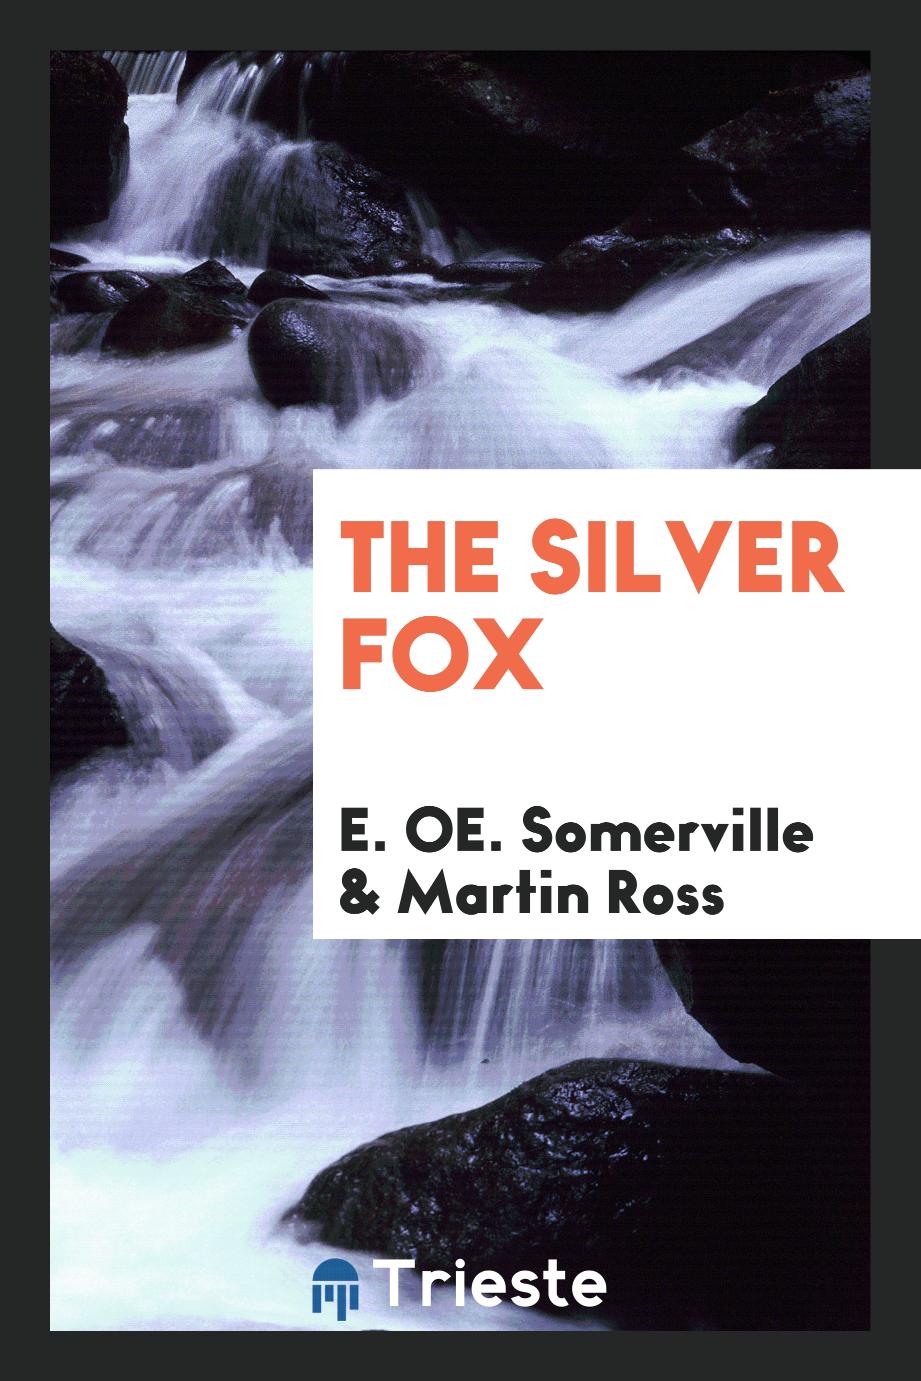 The silver fox